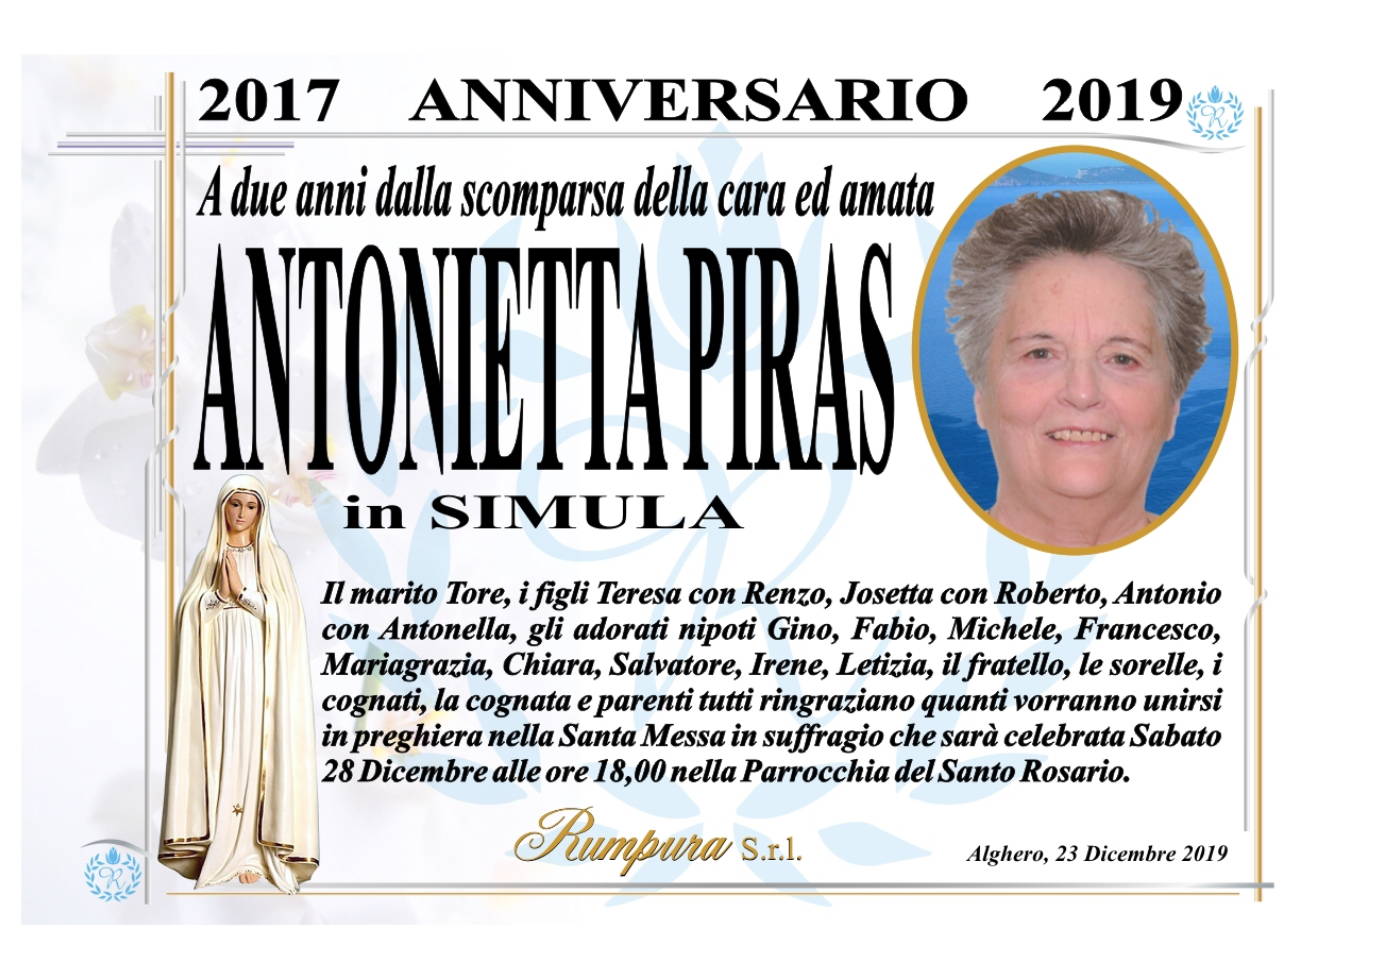 Antonietta Piras